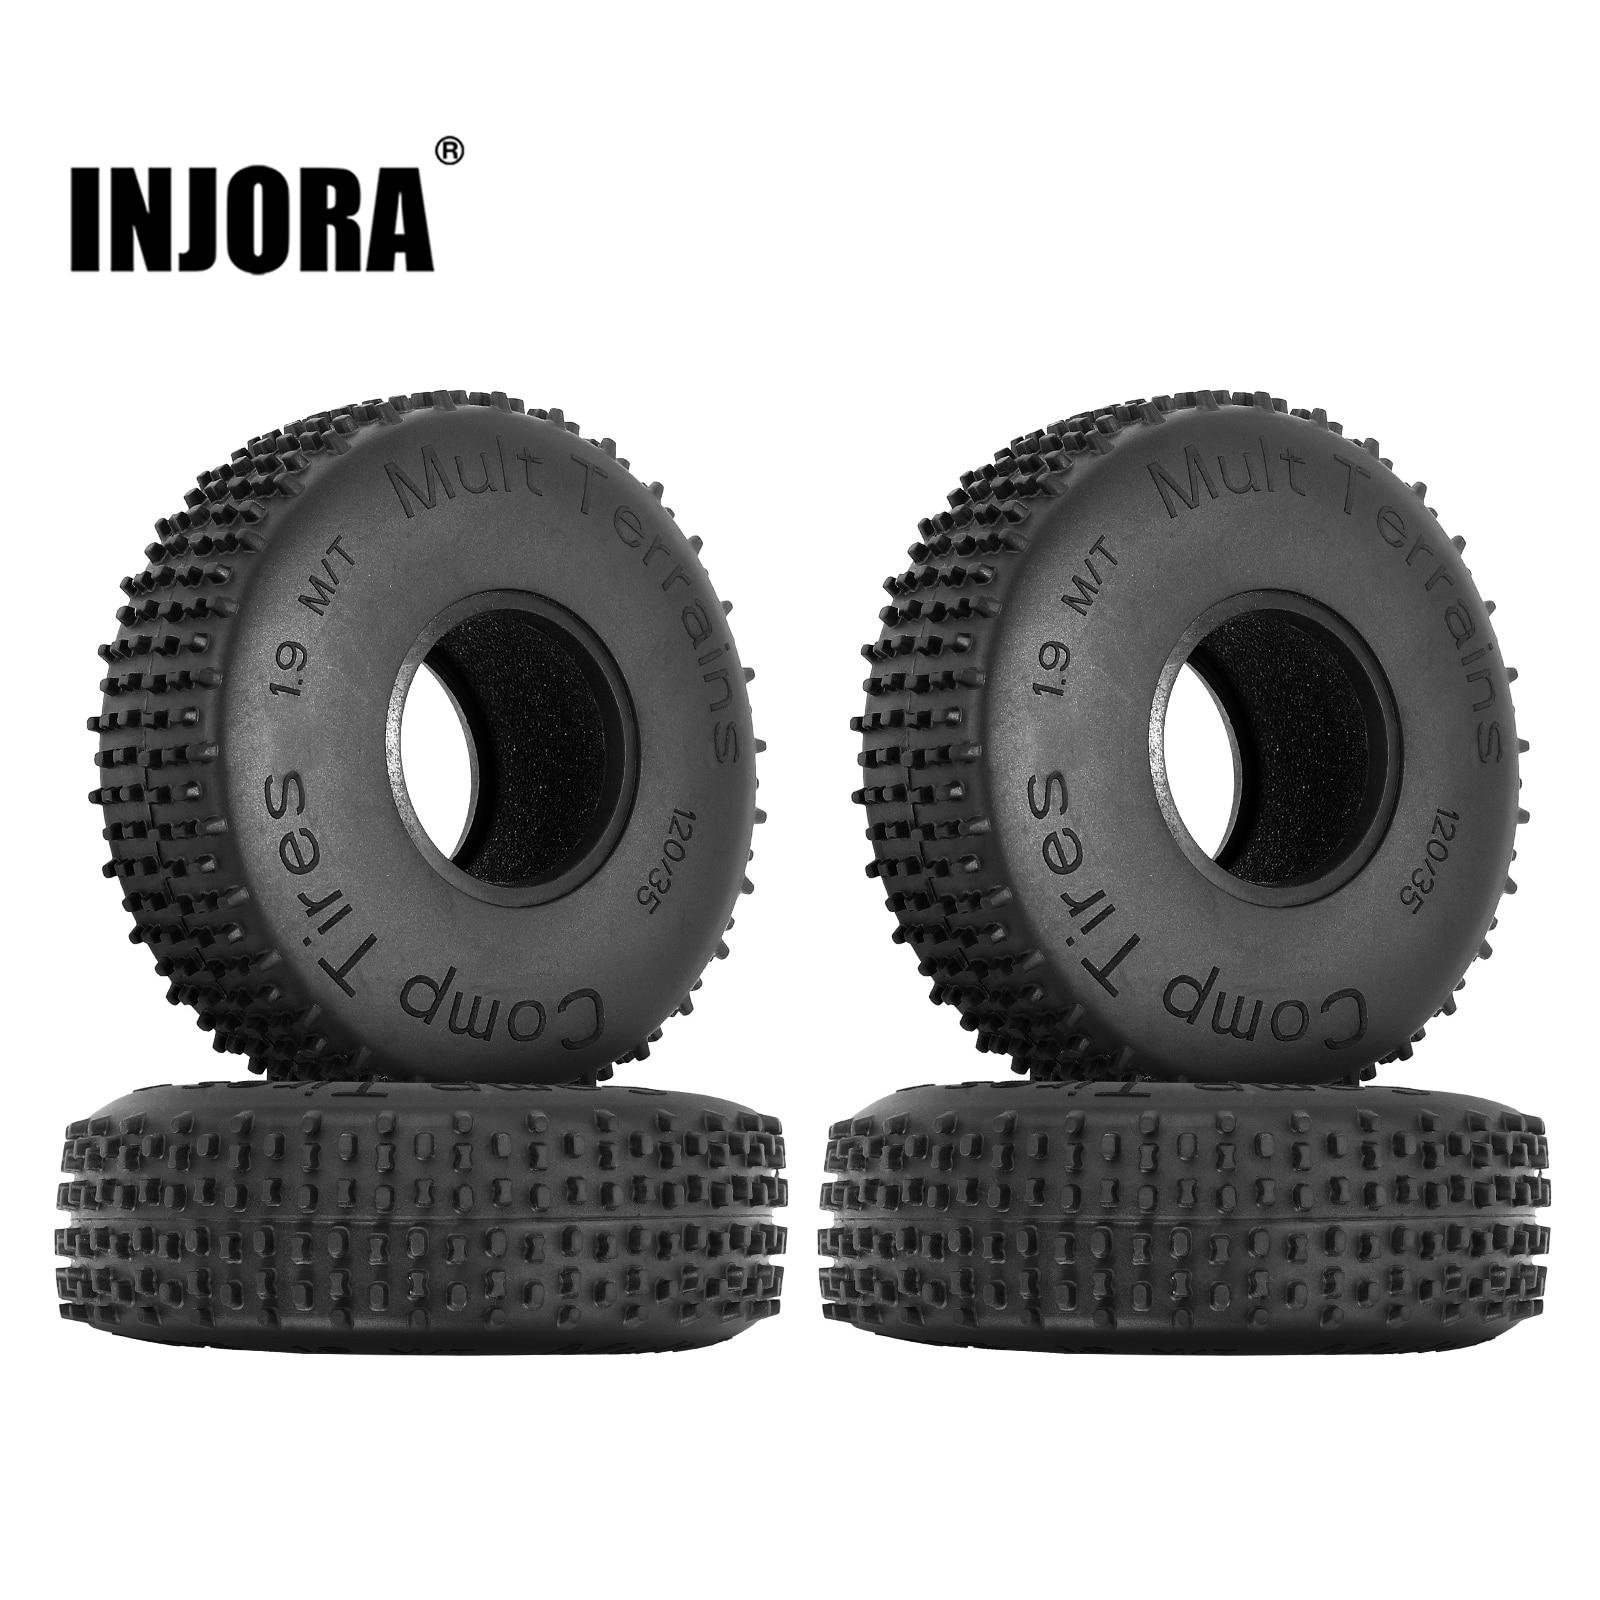 INJORA-Comp-Pins-120-35mm-Multi-Terrains-1-9-Wheel-Tire-for-1-10-RC-Crawler.jpg